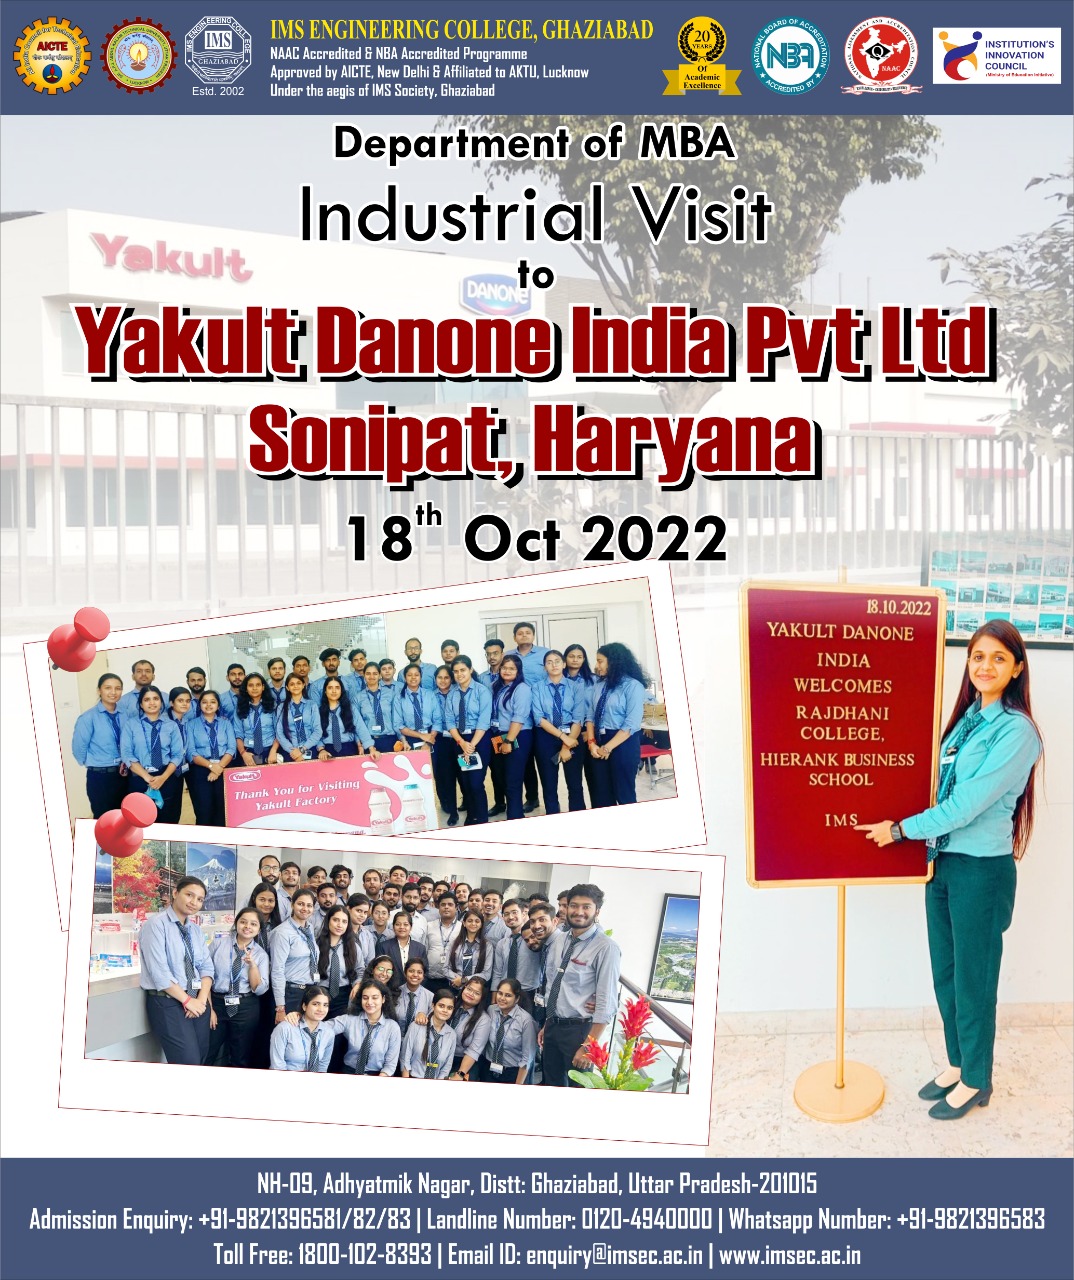  Department of MBA of IMS Engineering College organized an Industrial Visit to.Yakult Danone Sonipat, Haryana.